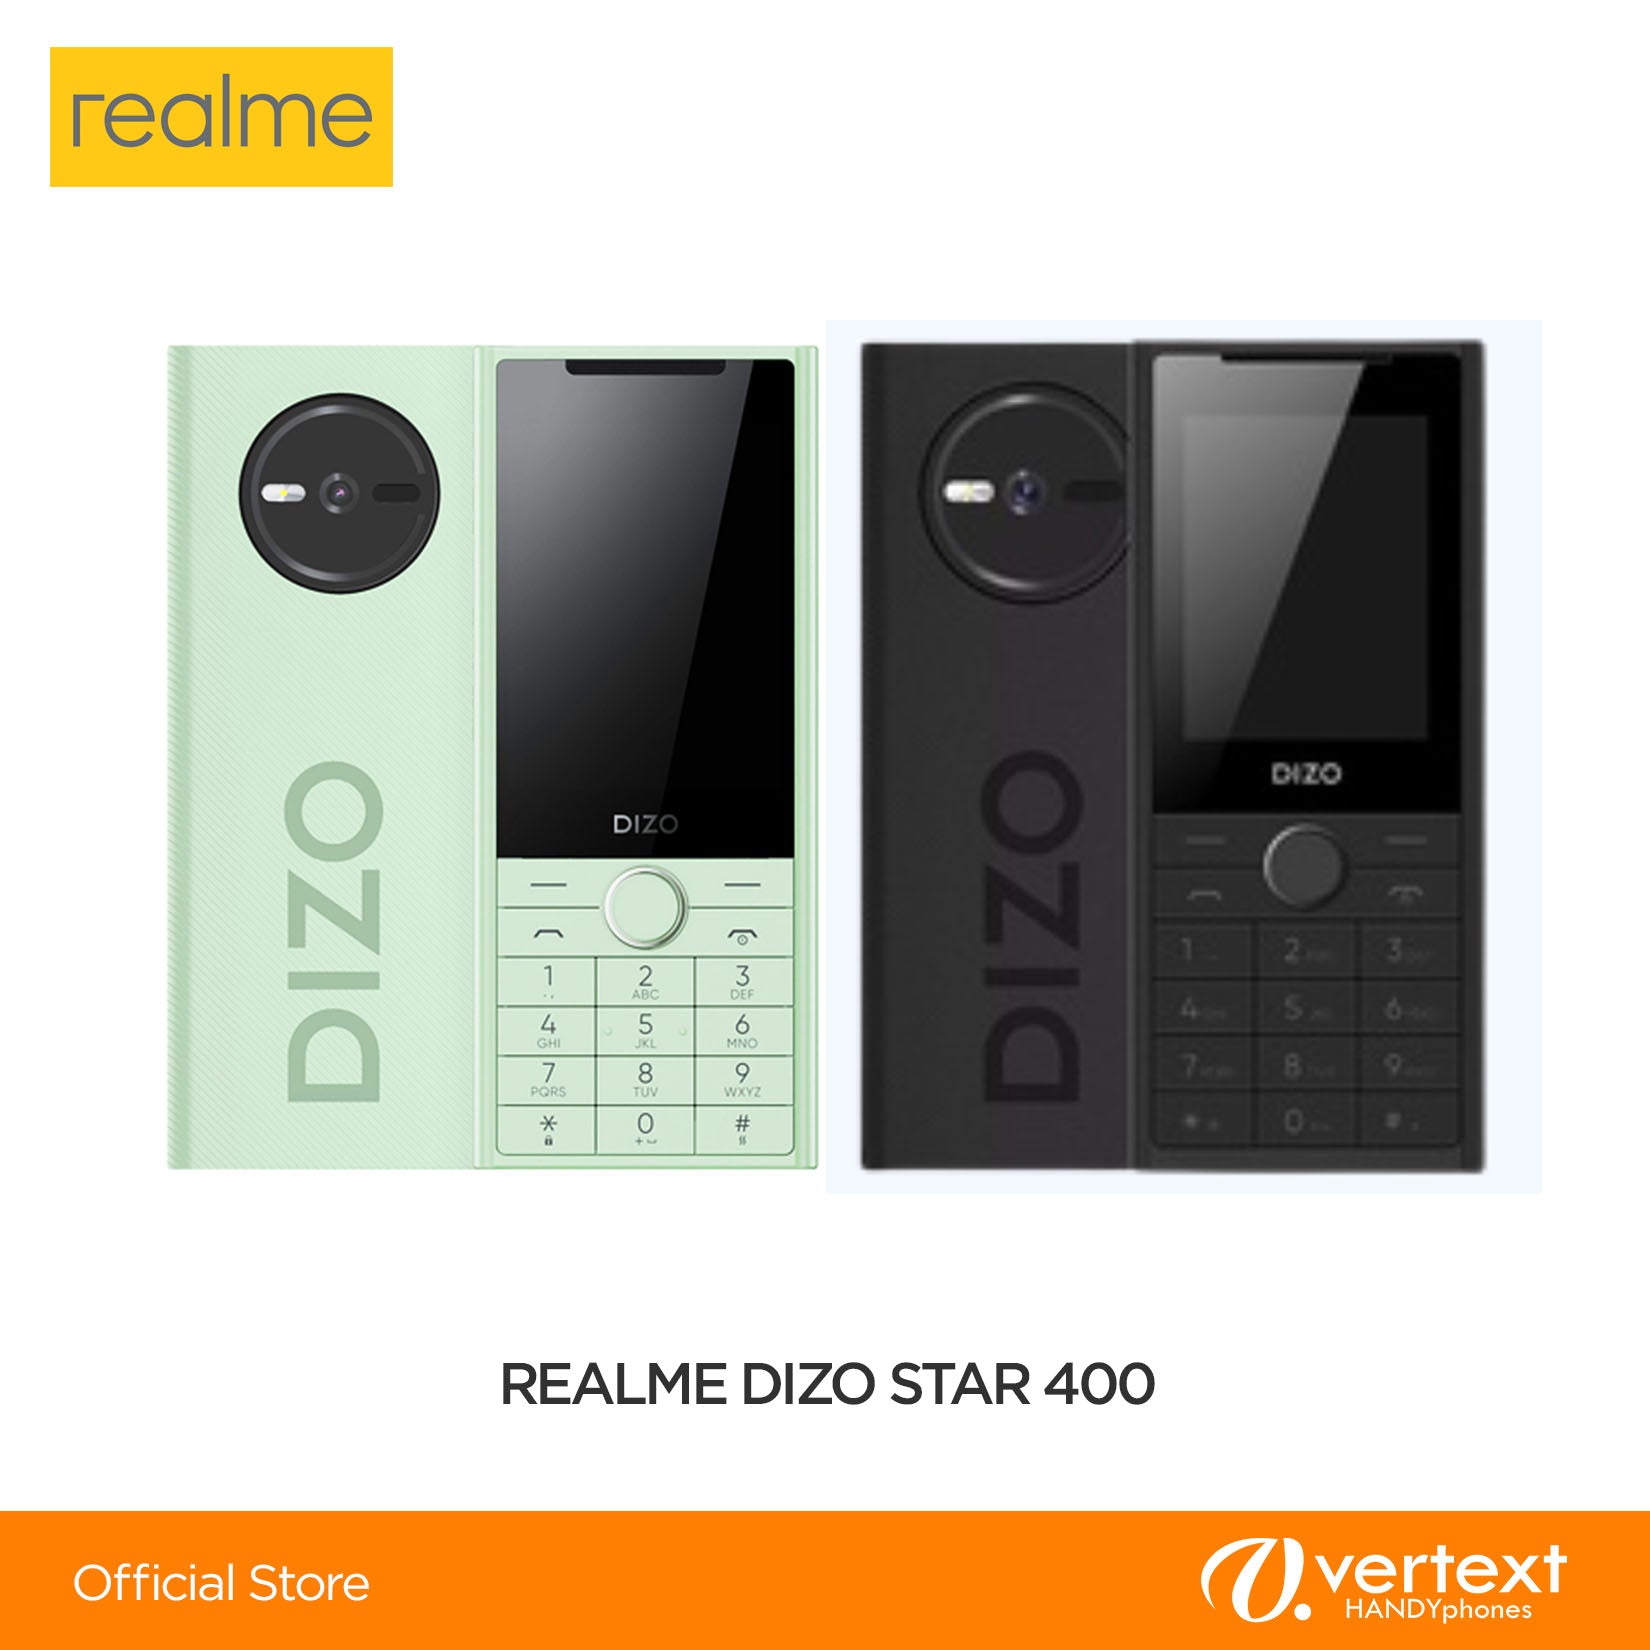 Realme DIZO STAR 400